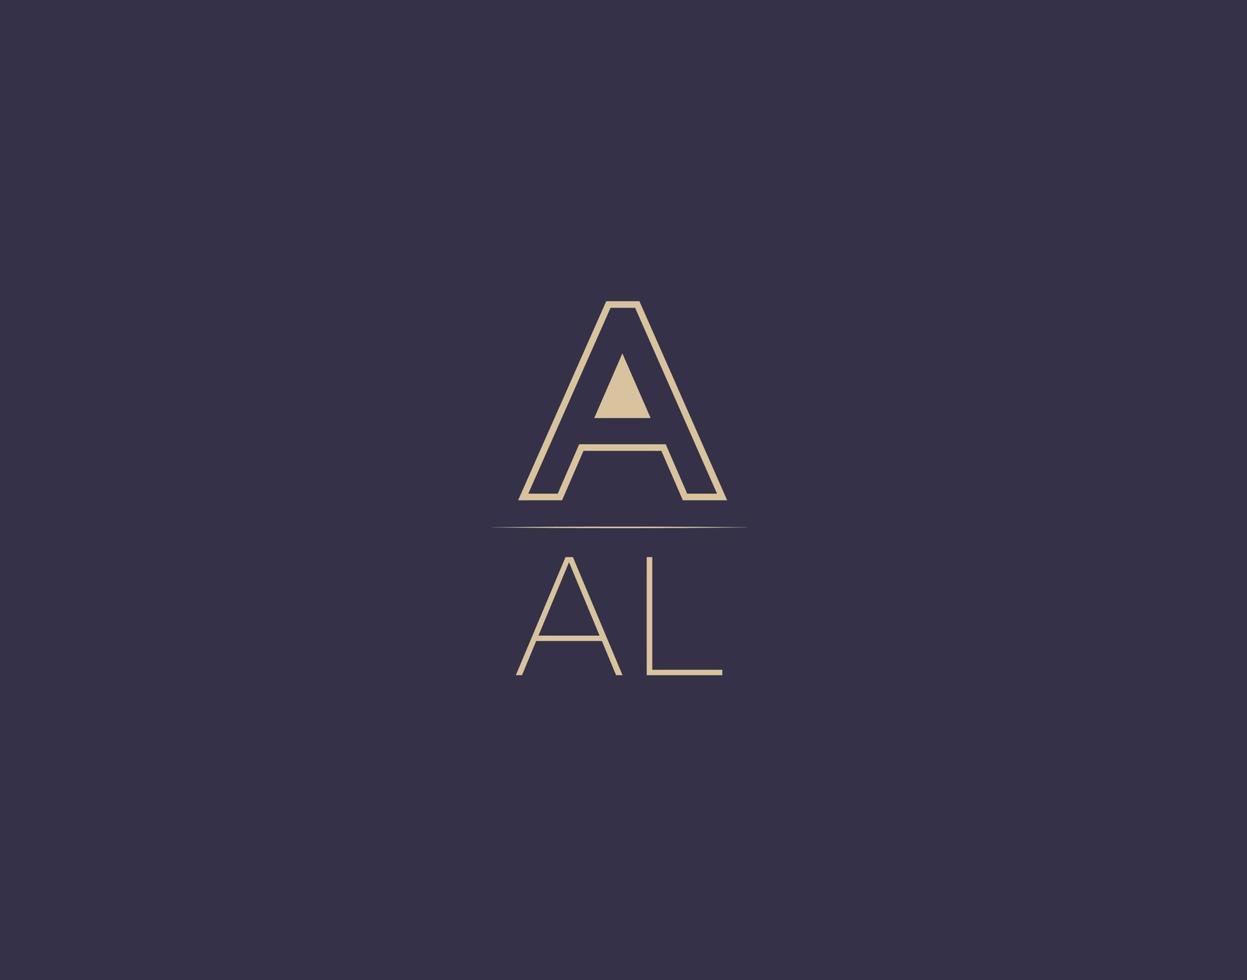 design de logotipo de carta aal imagens vetoriais minimalistas modernas vetor